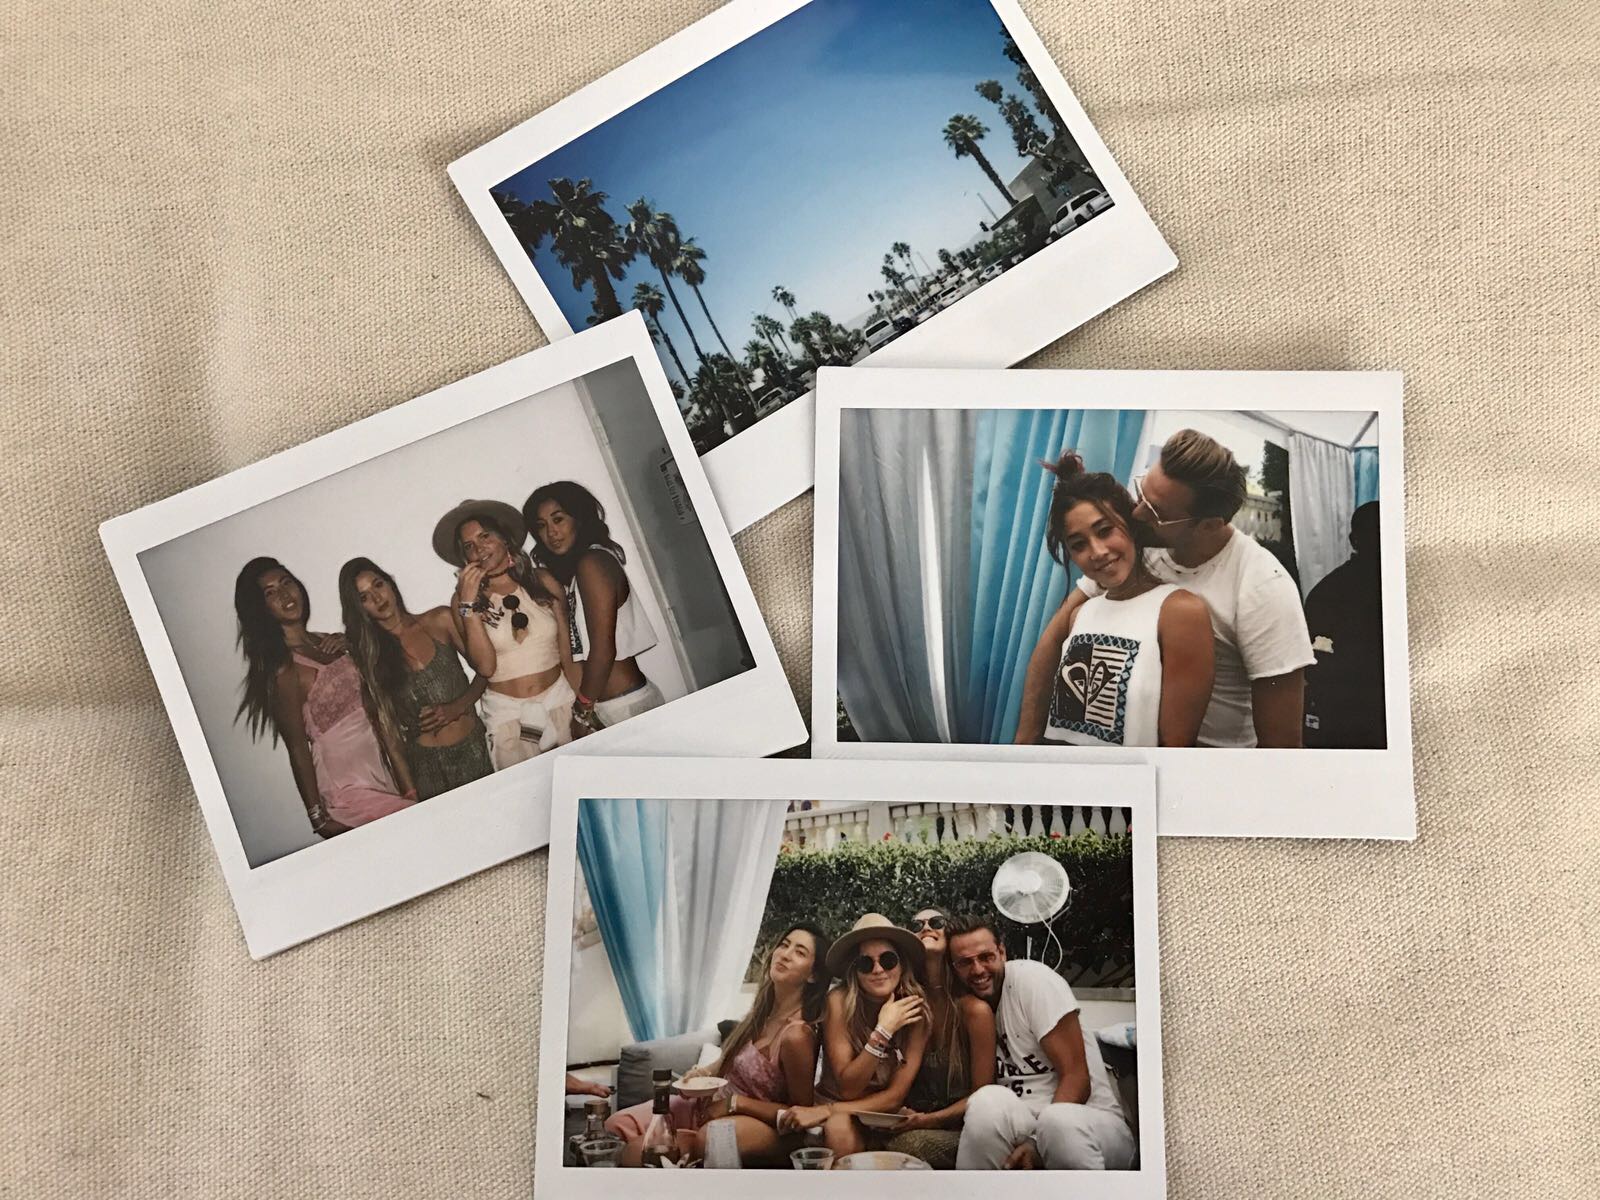 Kelia, Monyca and Bruna Share Their Top 5 Coachella Moments